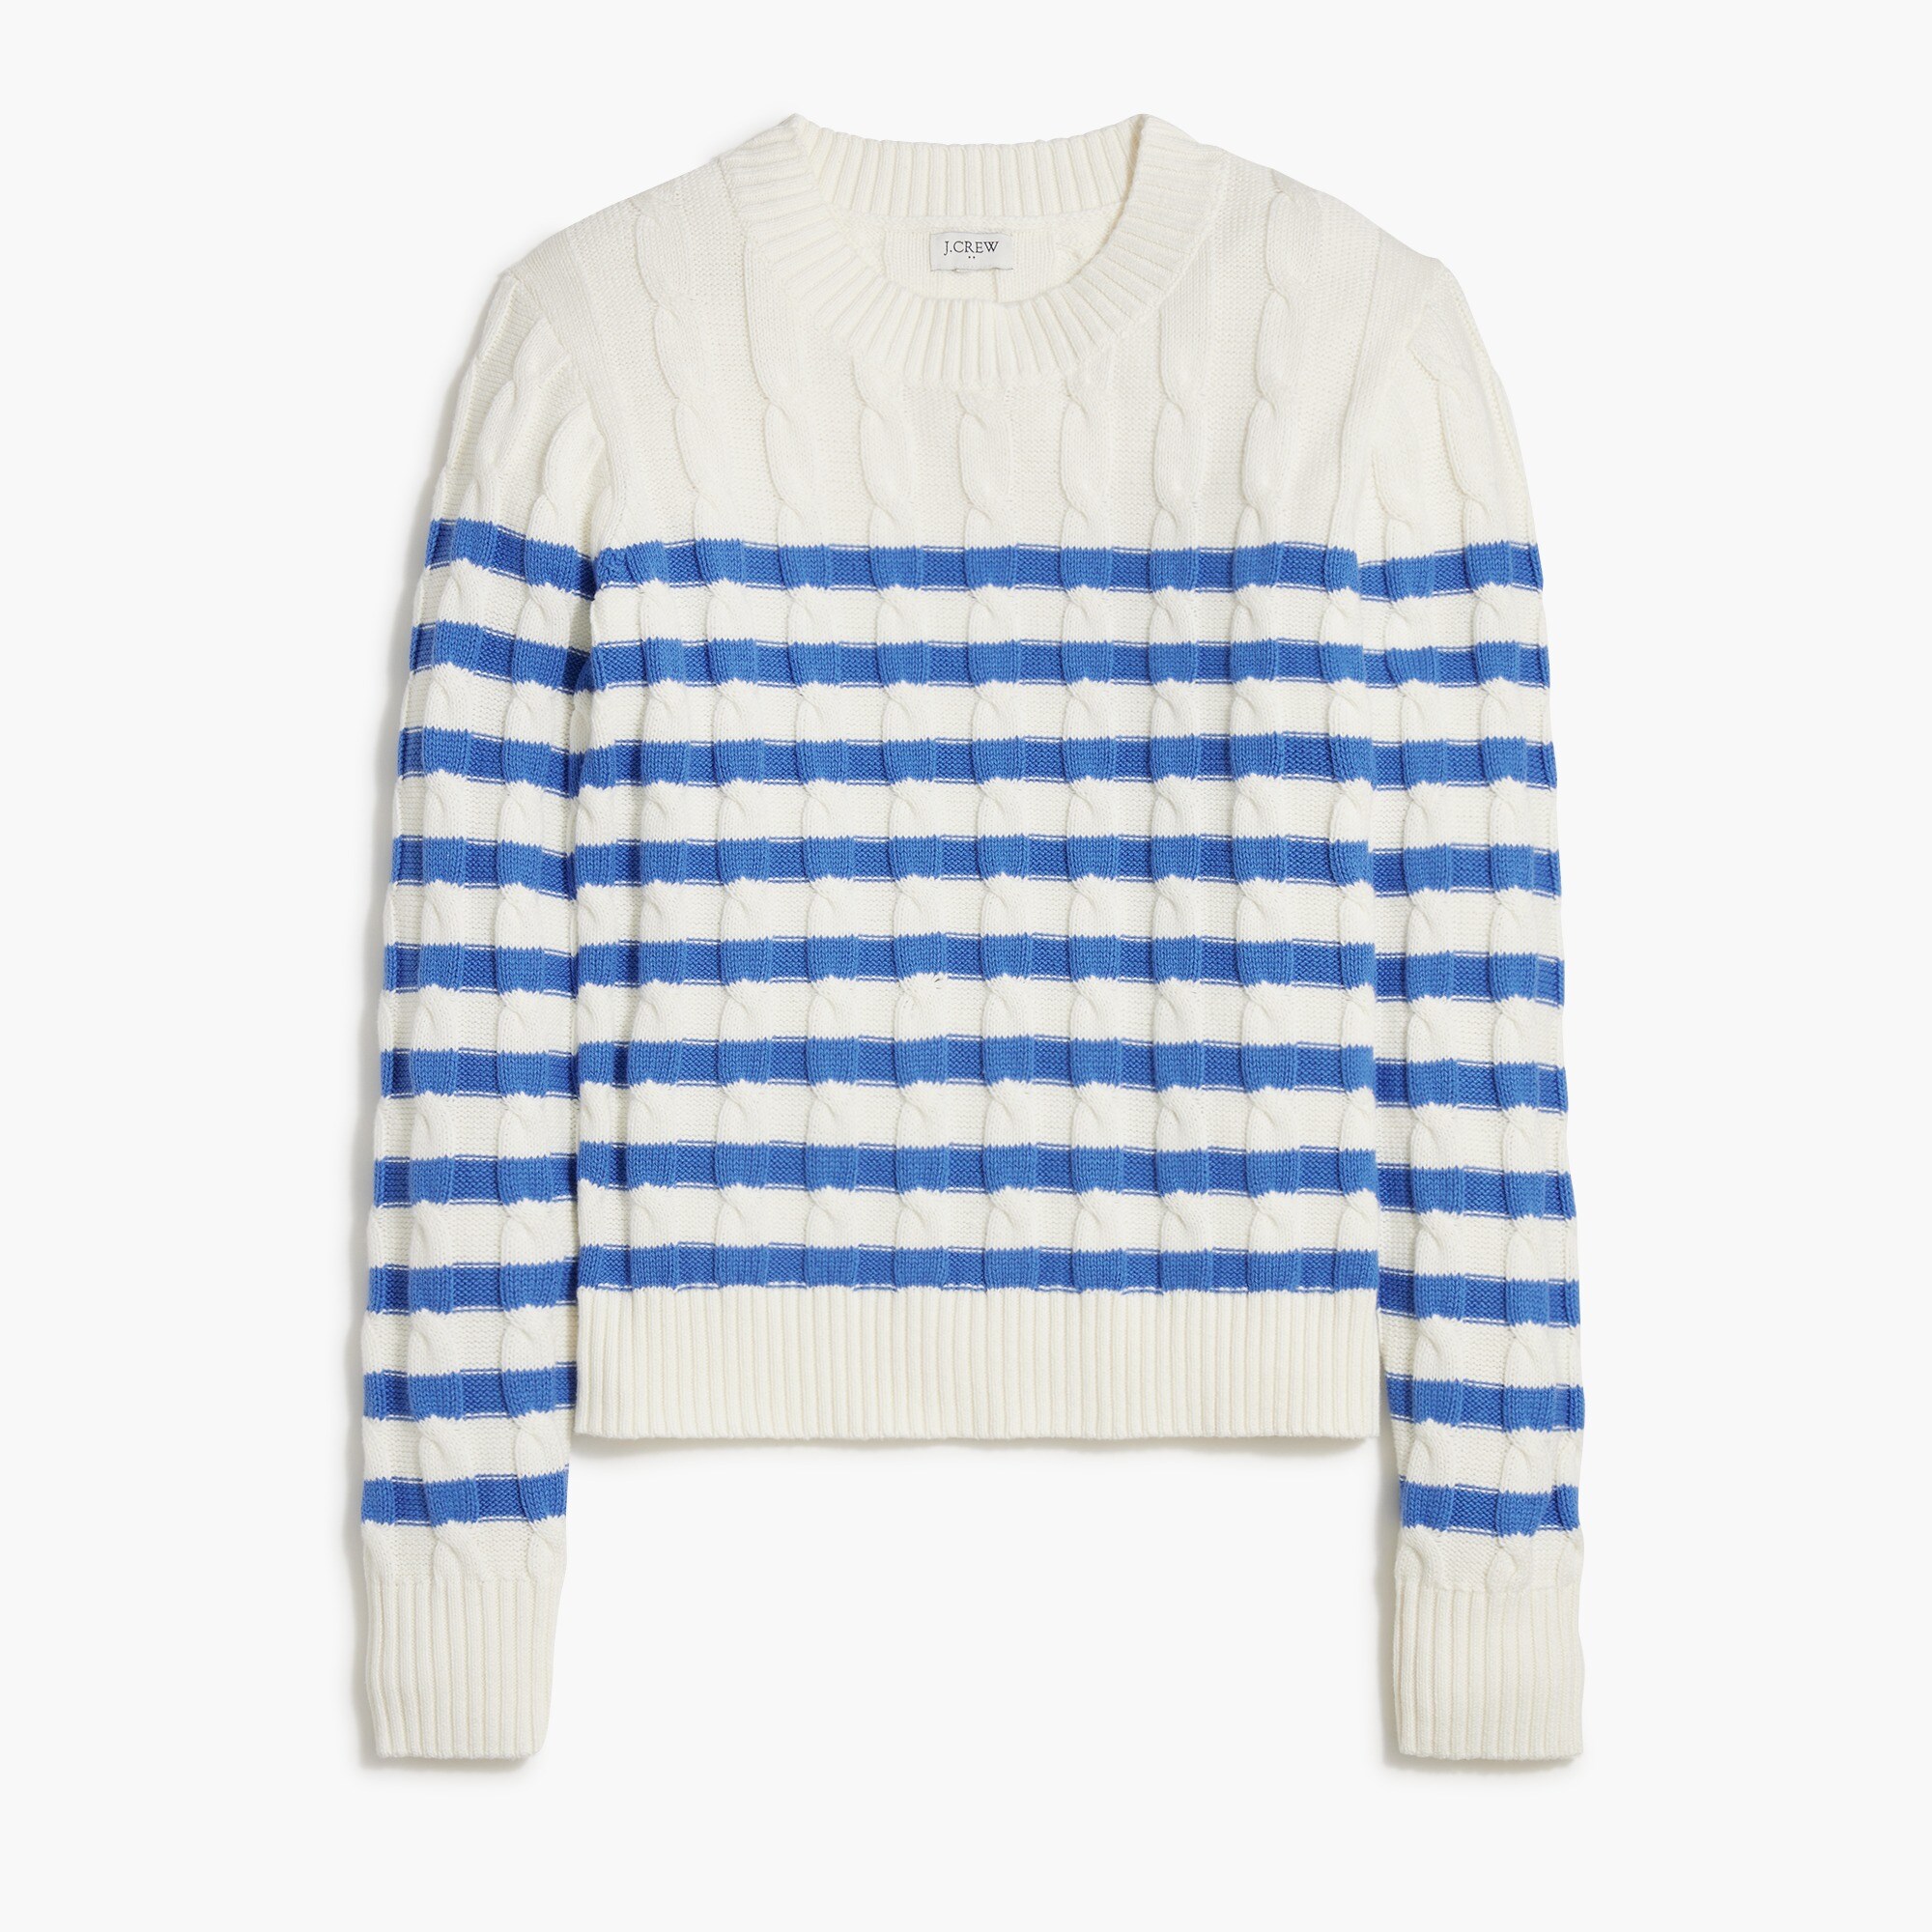  Striped cable crewneck sweater